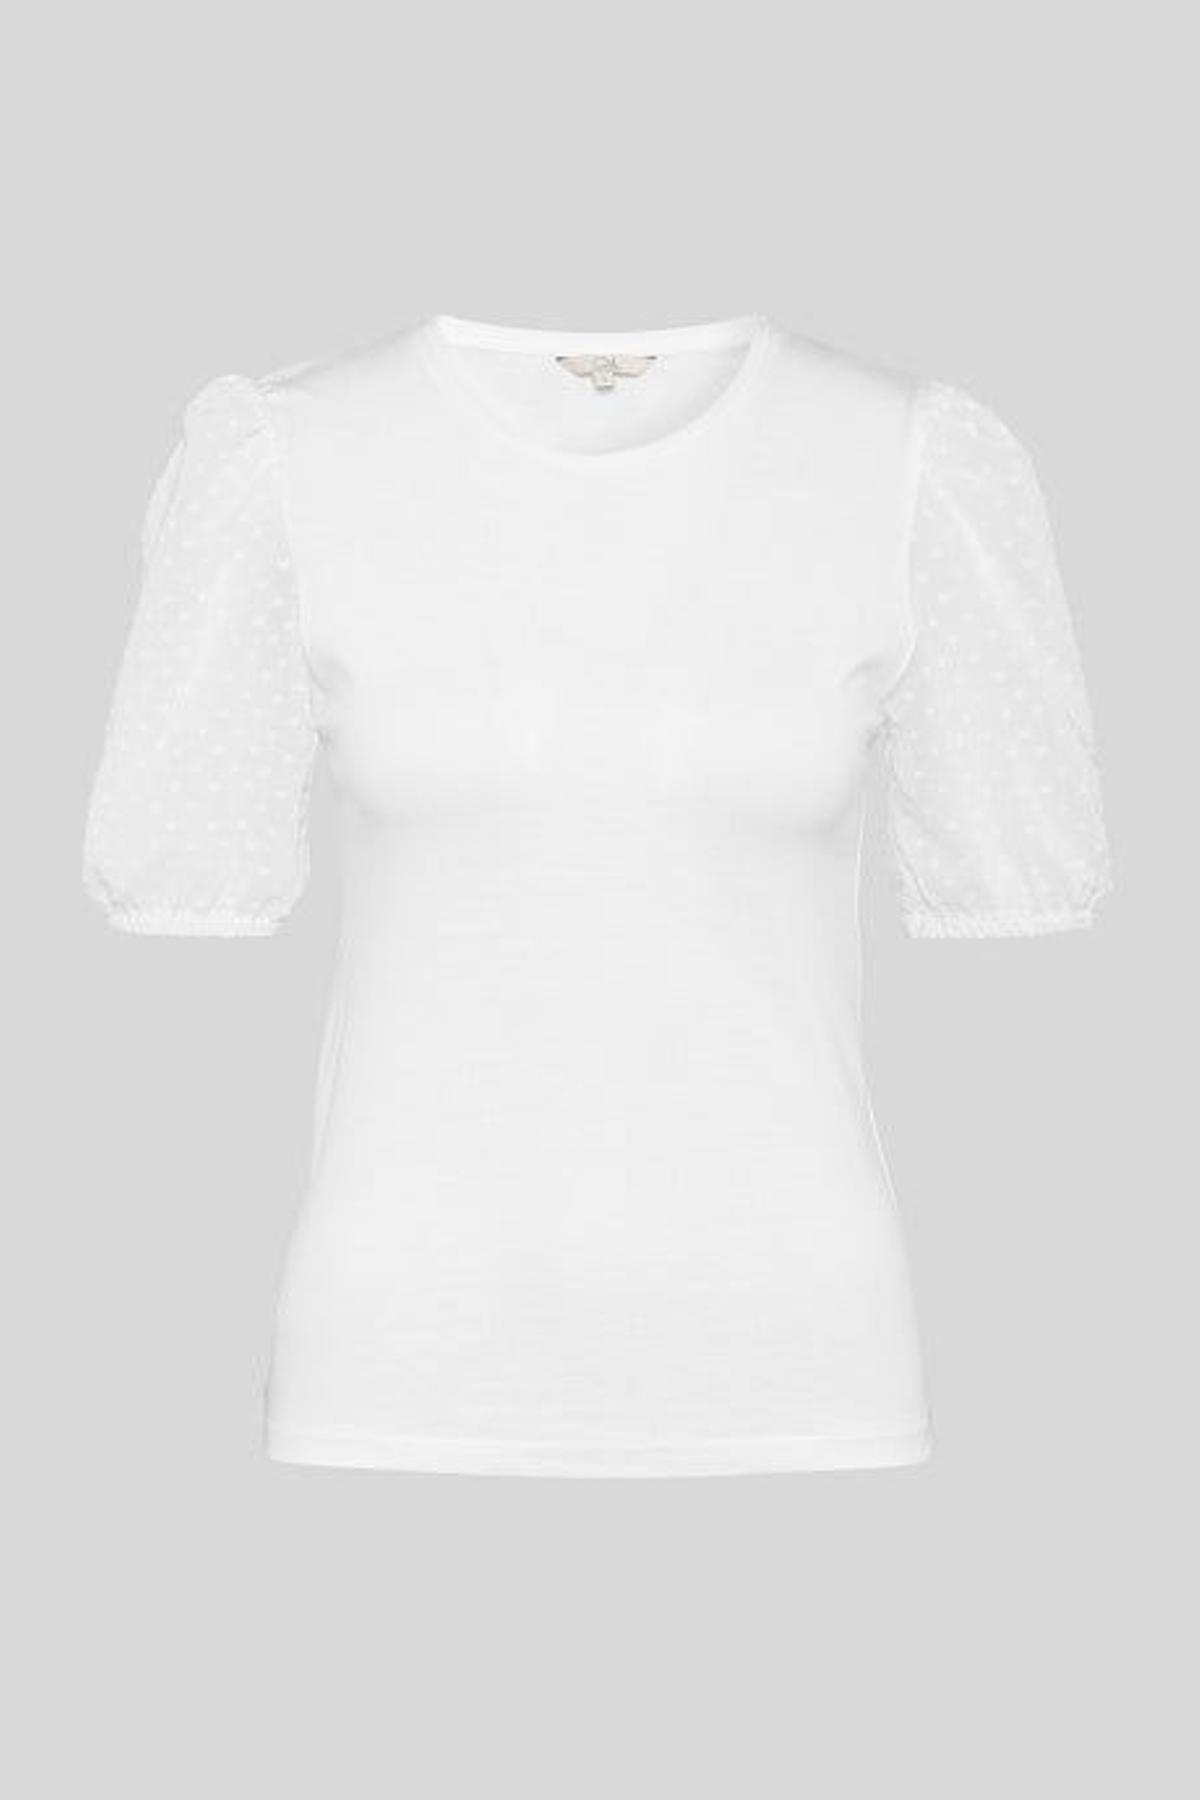 Camiseta blanca con mangas globo semitransparentes (Precio: 9,90 euros)